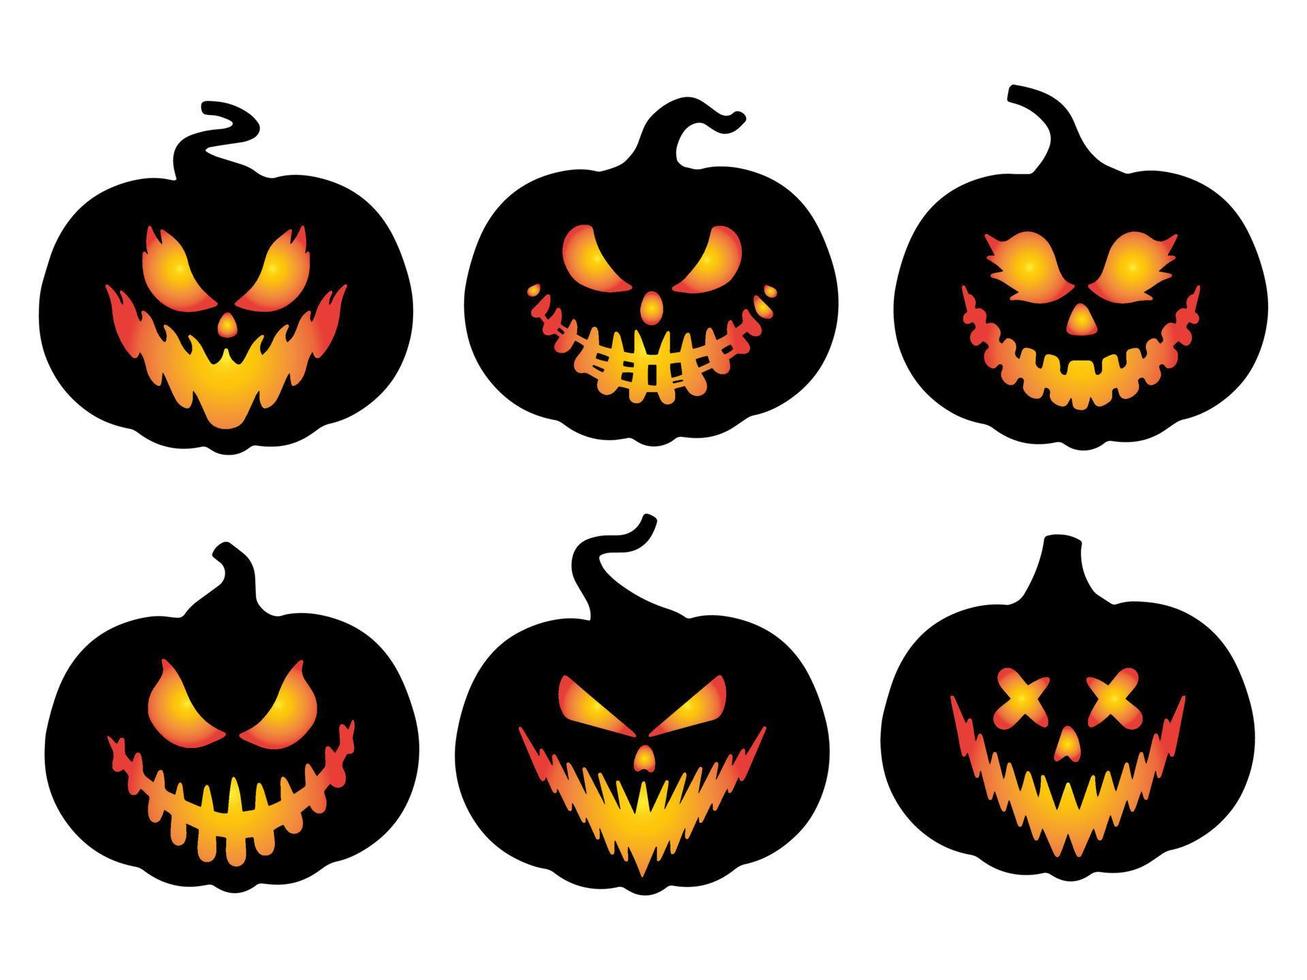 Halloween Scary Face Pumpkin Illustration vector